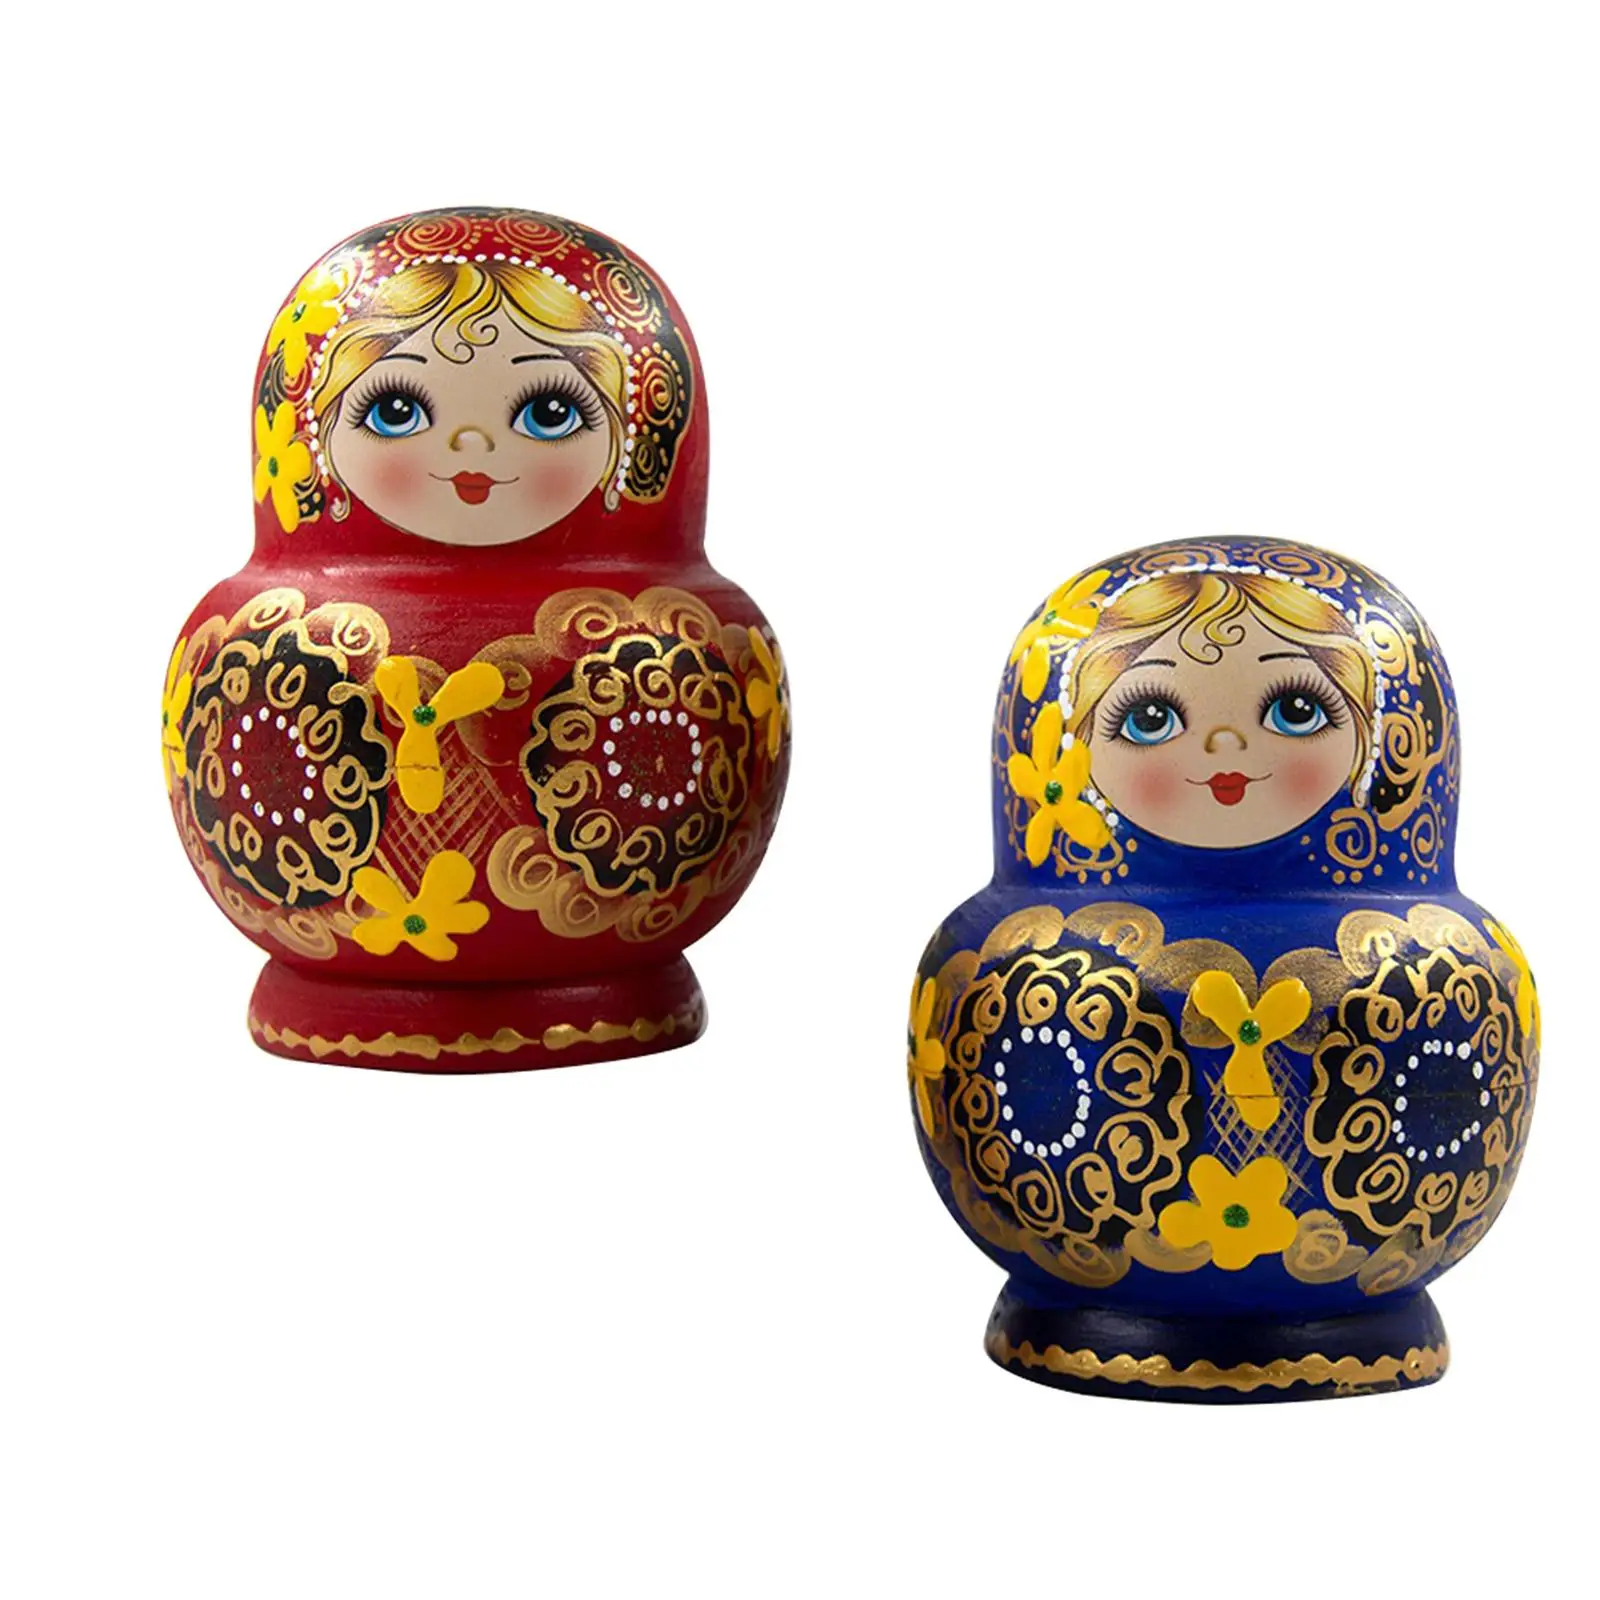 10x Handmade Russian Nesting Dolls Nested Toy Matryoshka Dolls for Room Office Decoration Birthday Gift Ornaments